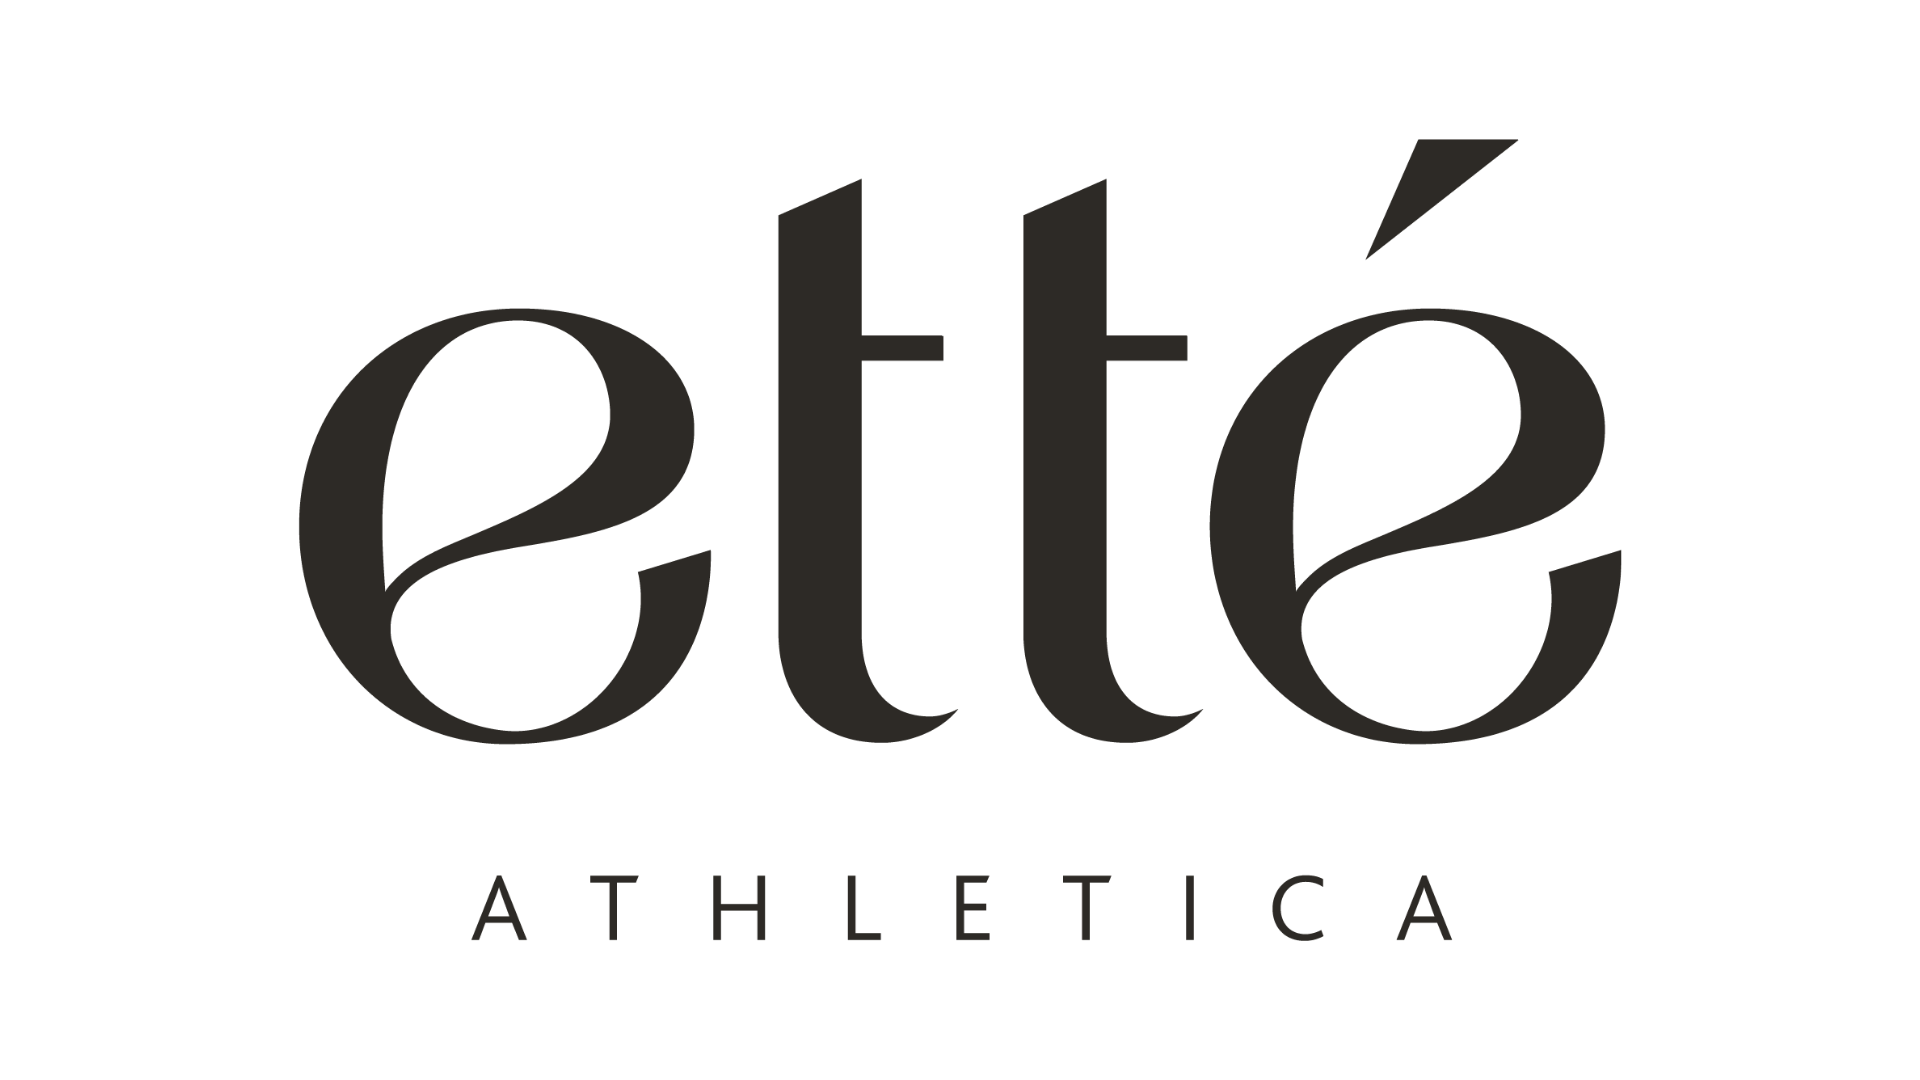 Etté Athletica - The Inner Lift Journal – Ette Athletica